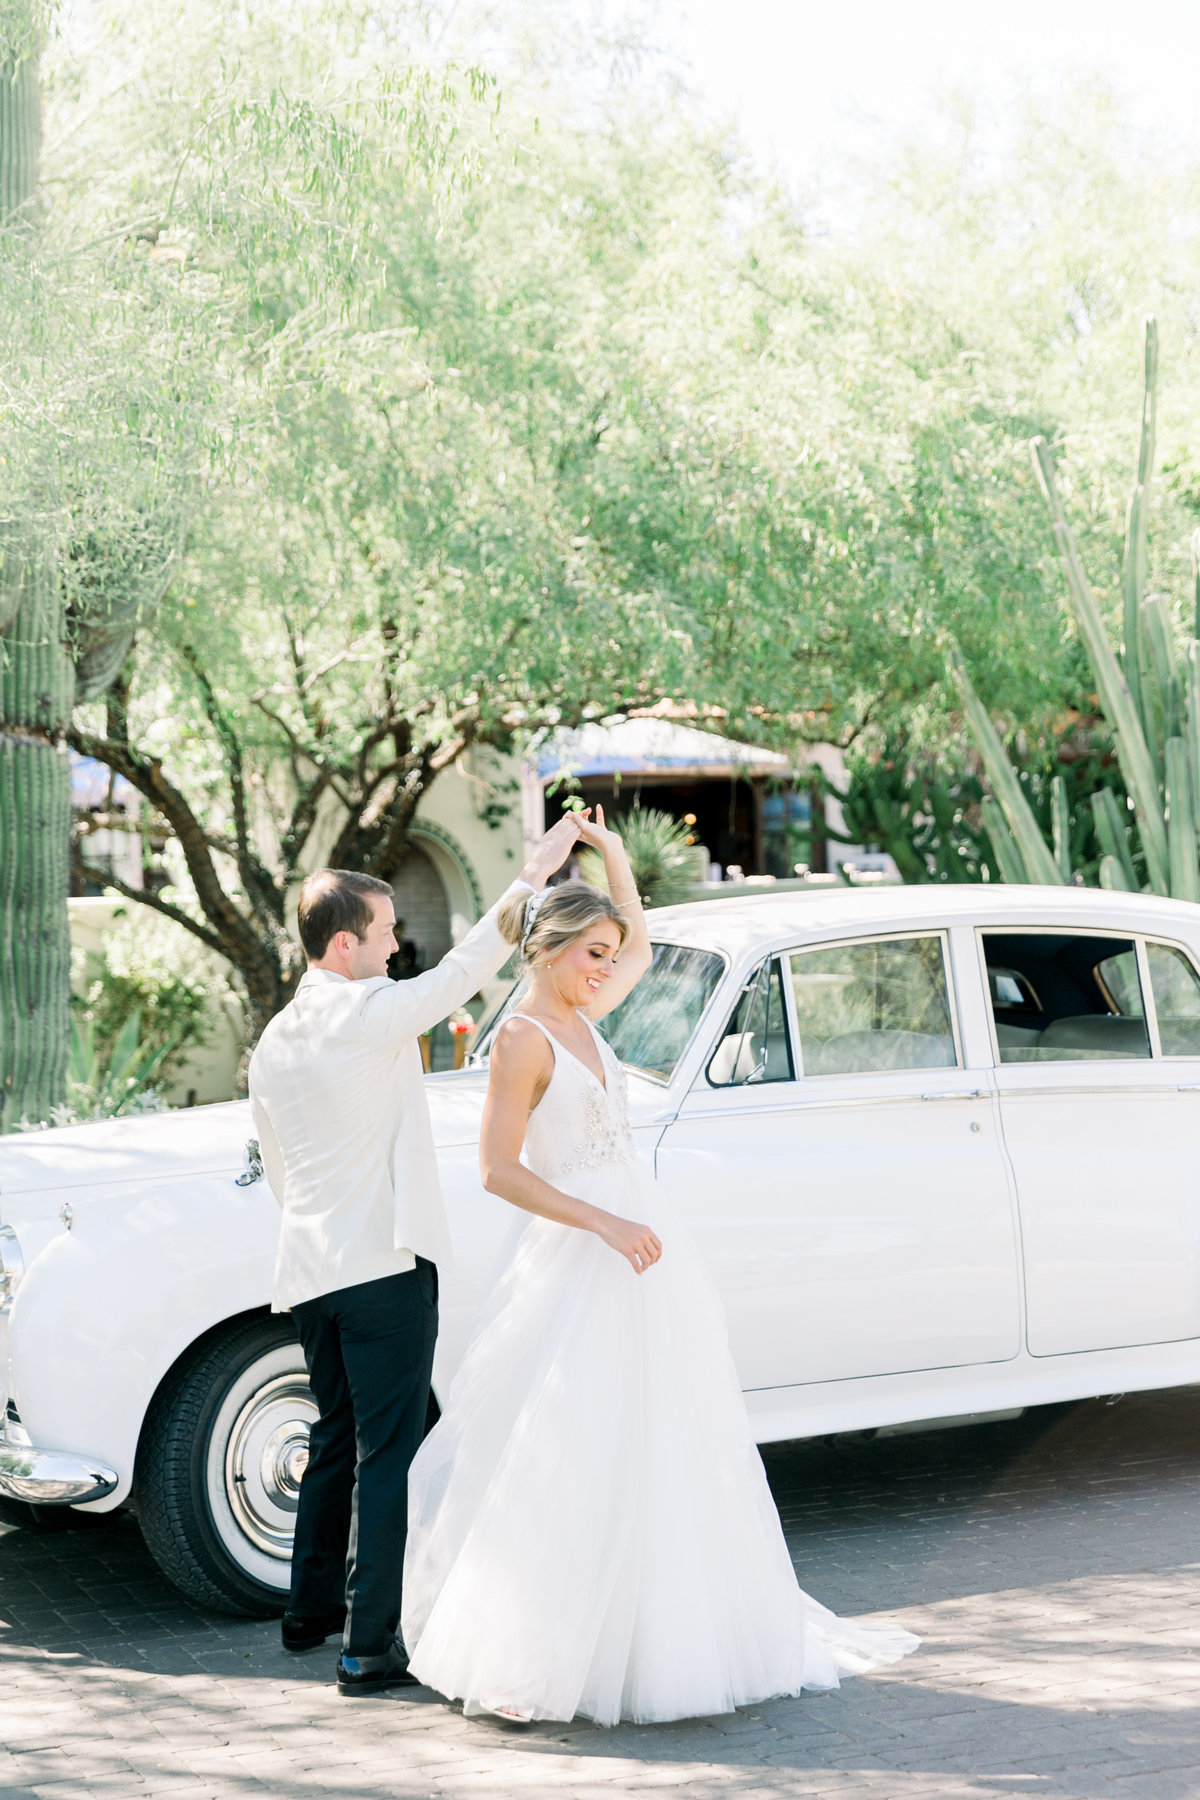 Karlie Colleen Photography - El Chorro Arizona Desert Wedding - Kylie & Doug-308